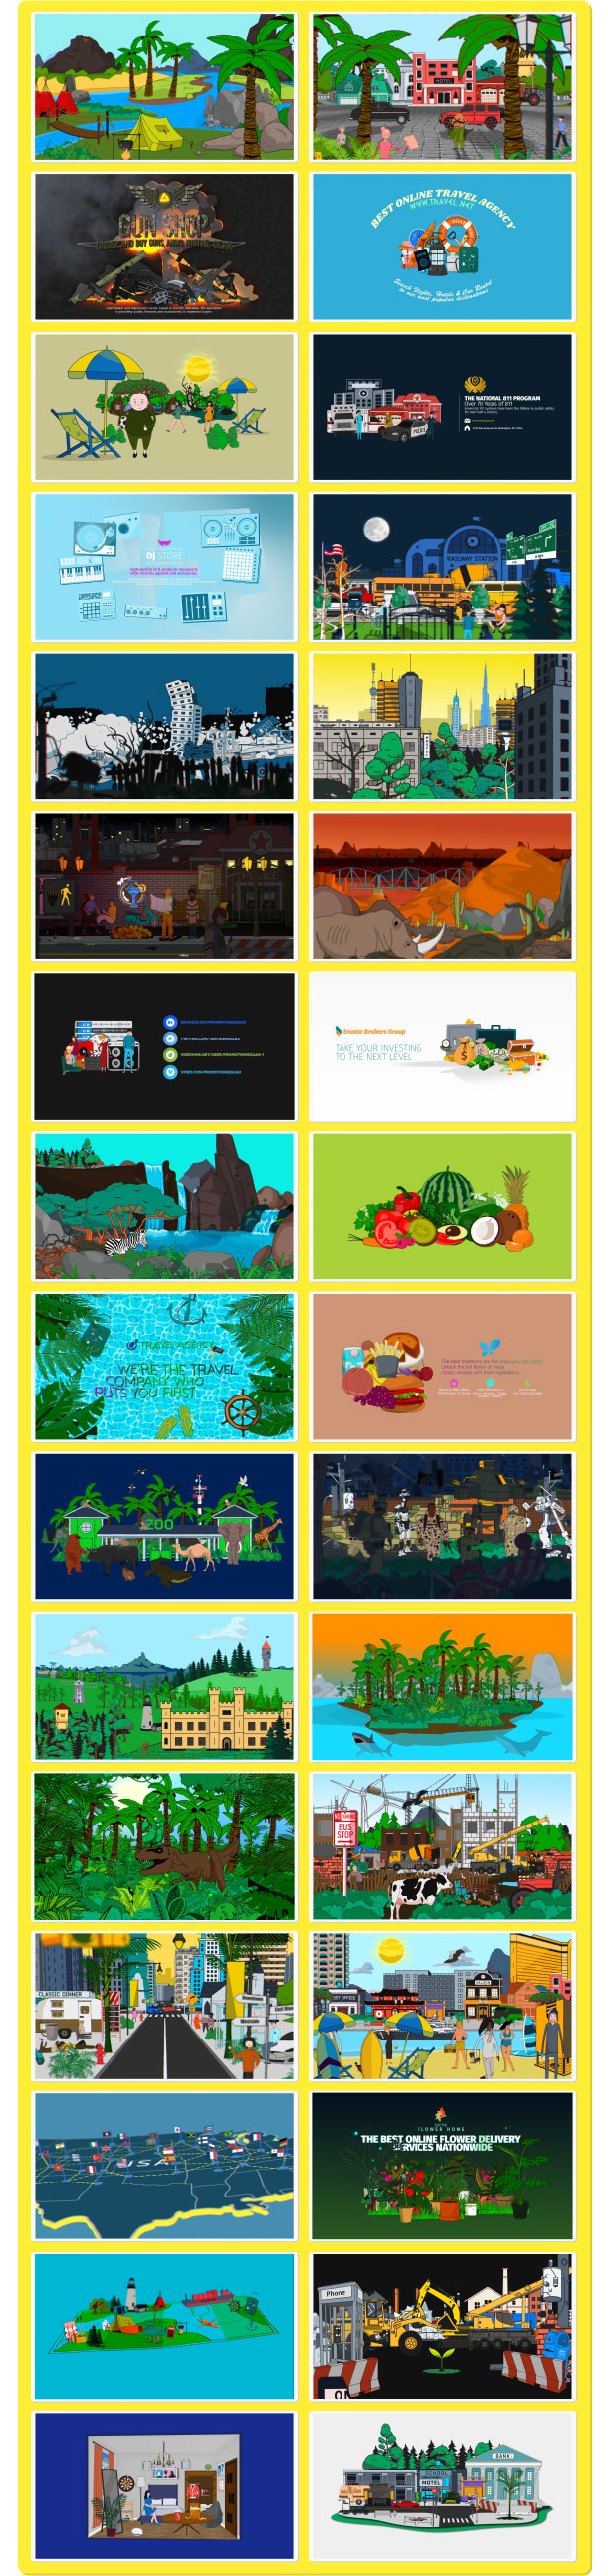 2000+ Animated 2D Elements-4.jpg